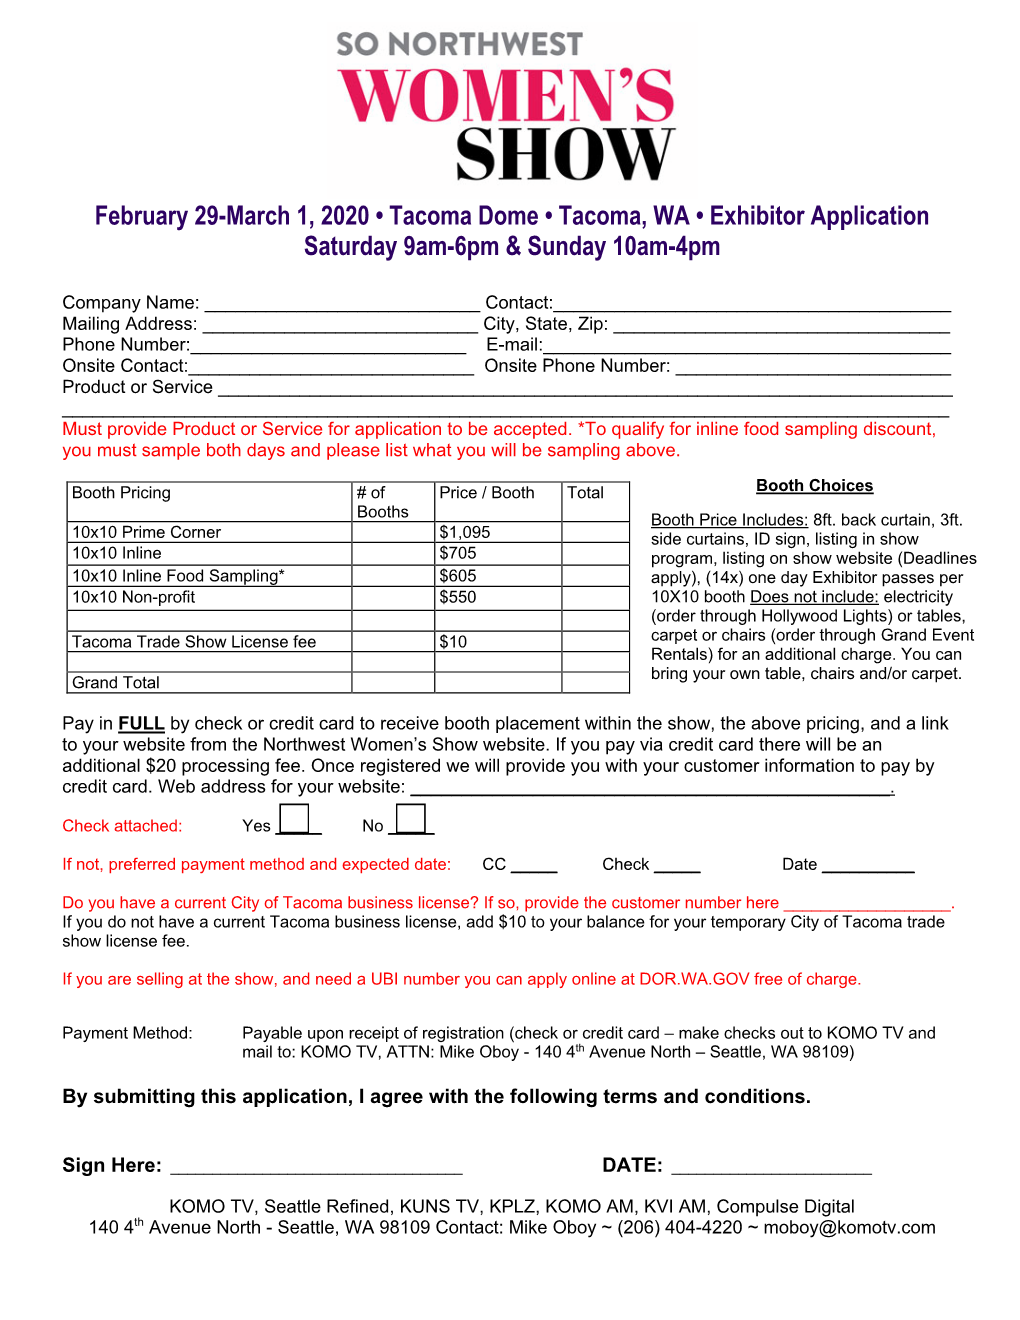 February 29-March 1, 2020 • Tacoma Dome • Tacoma, WA • Exhibitor Application Saturday 9Am-6Pm & Sunday 10Am-4Pm